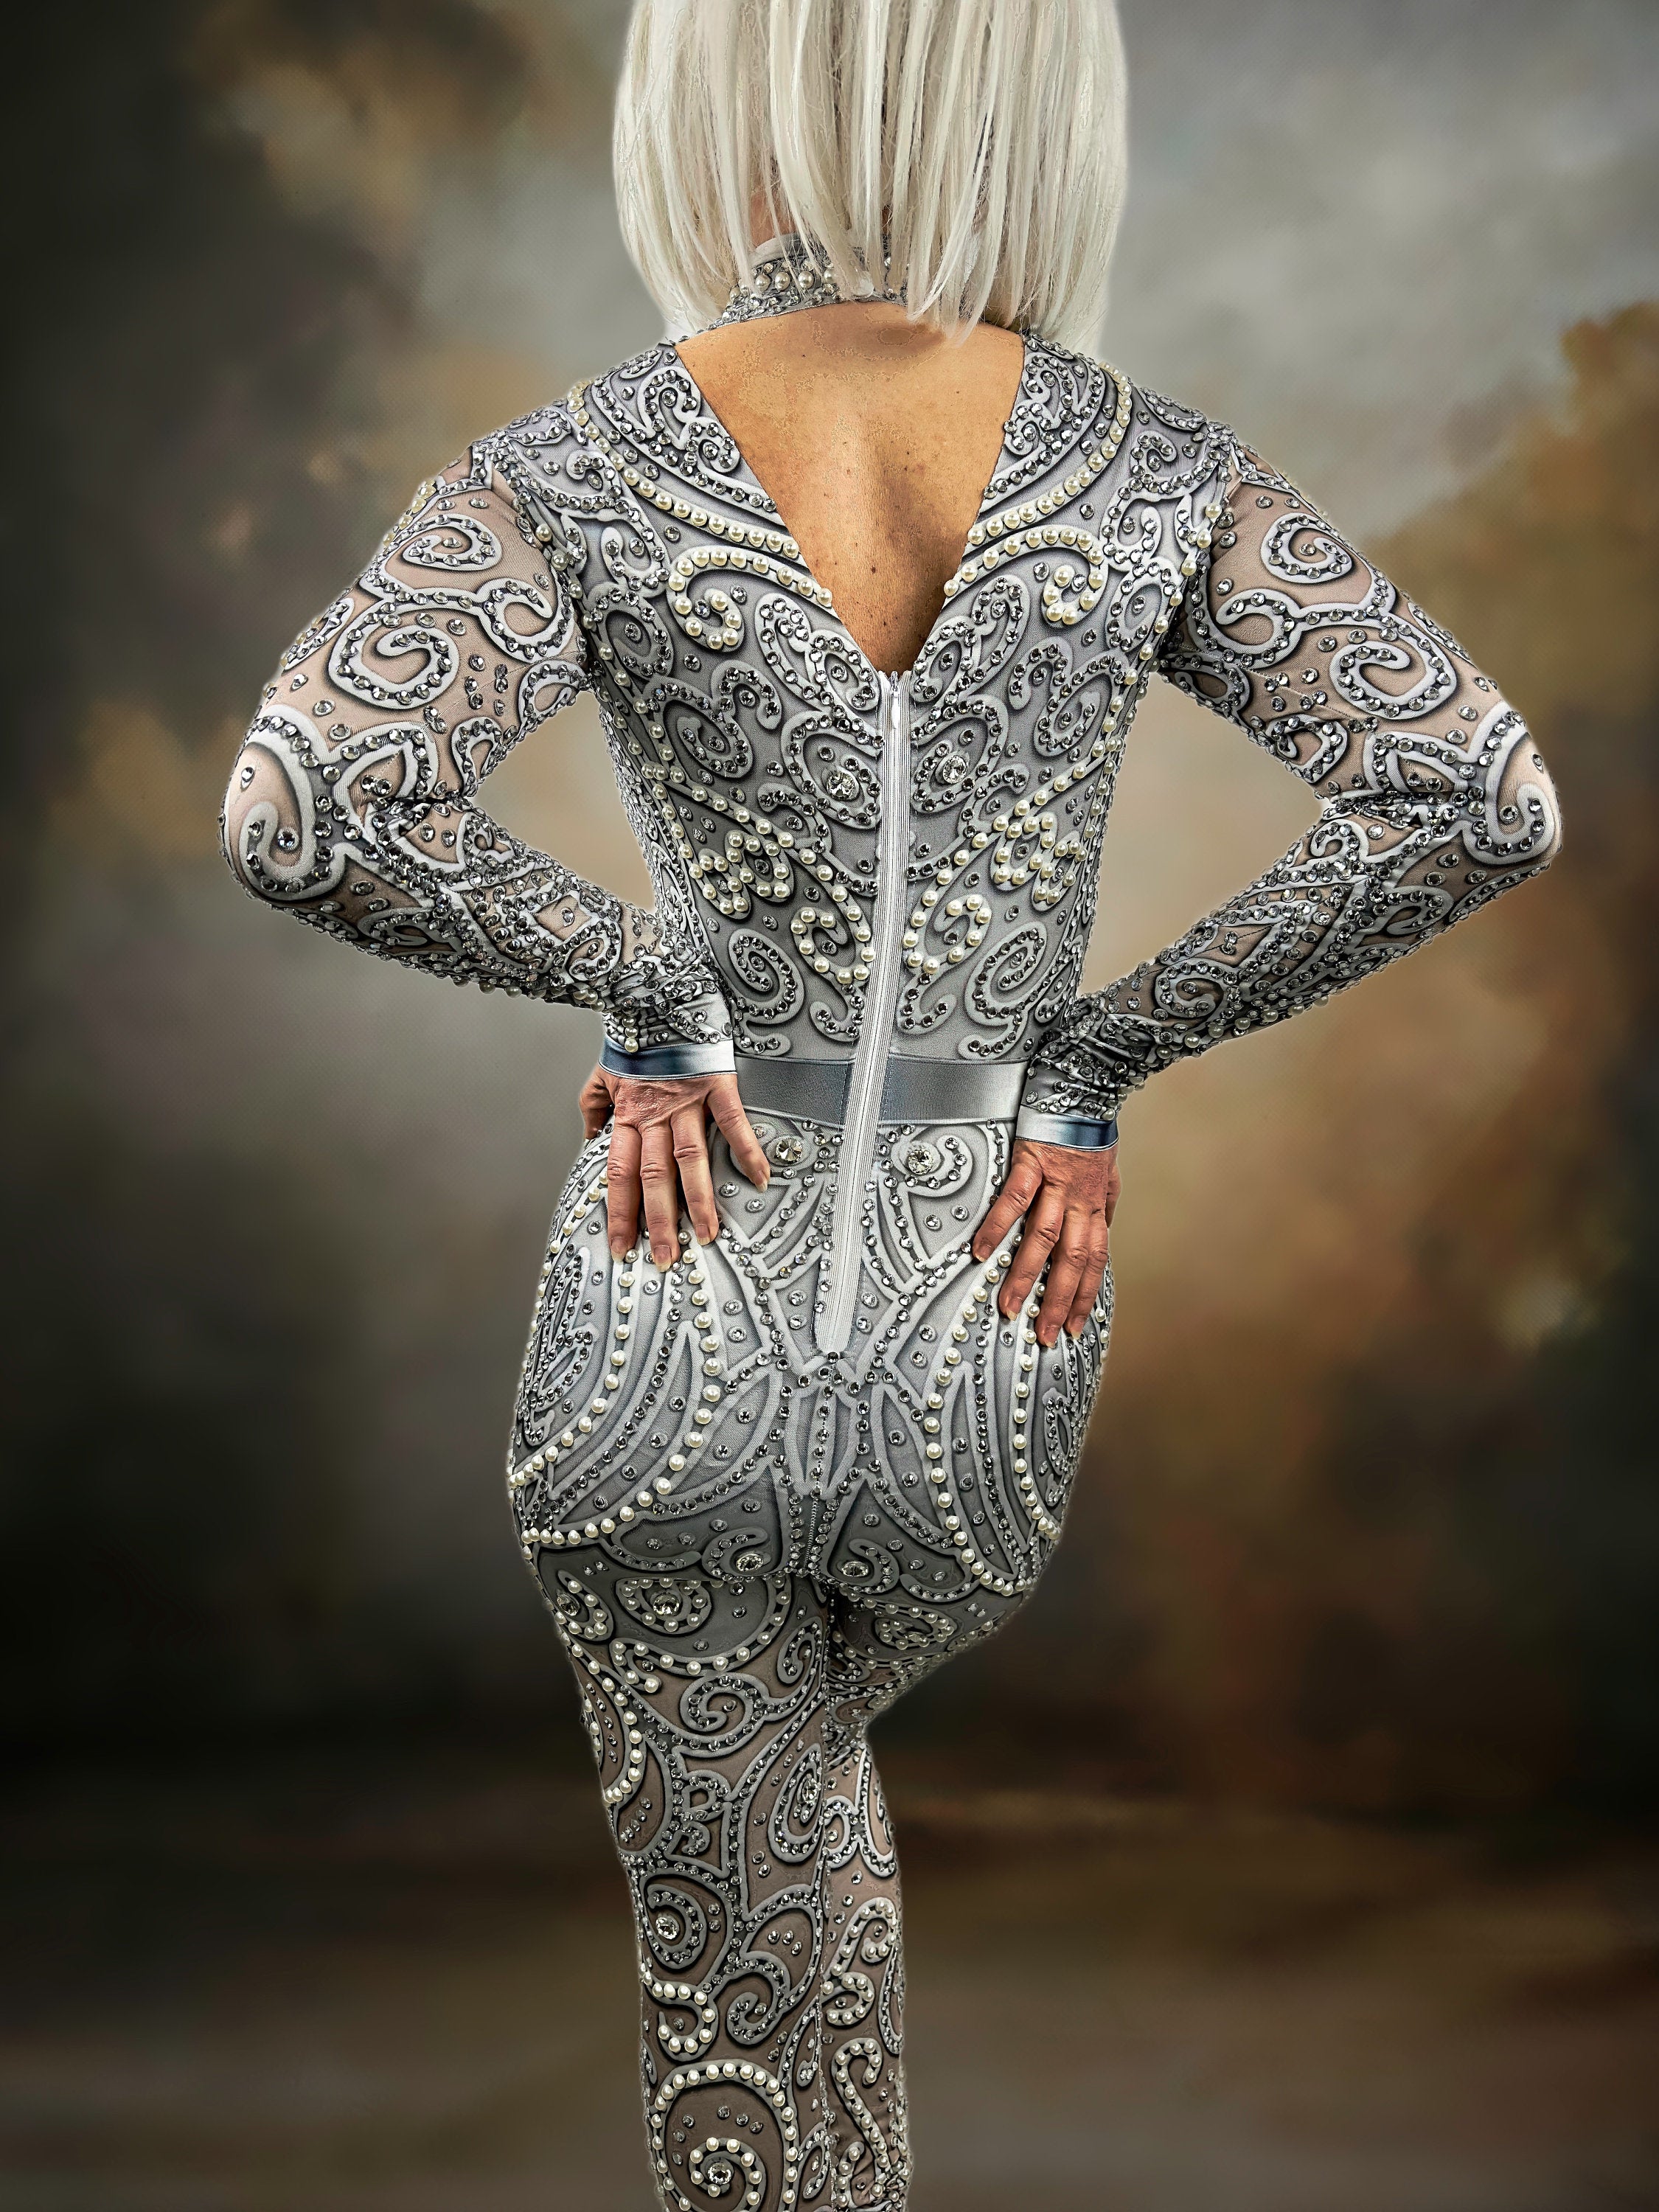 Venus Rhinestone Bodysuit / Black Pearl Diamond Jumpsuit / Festival Outfit, Wedding Party Dress, Burning Man Performer, NYE Dance Costume